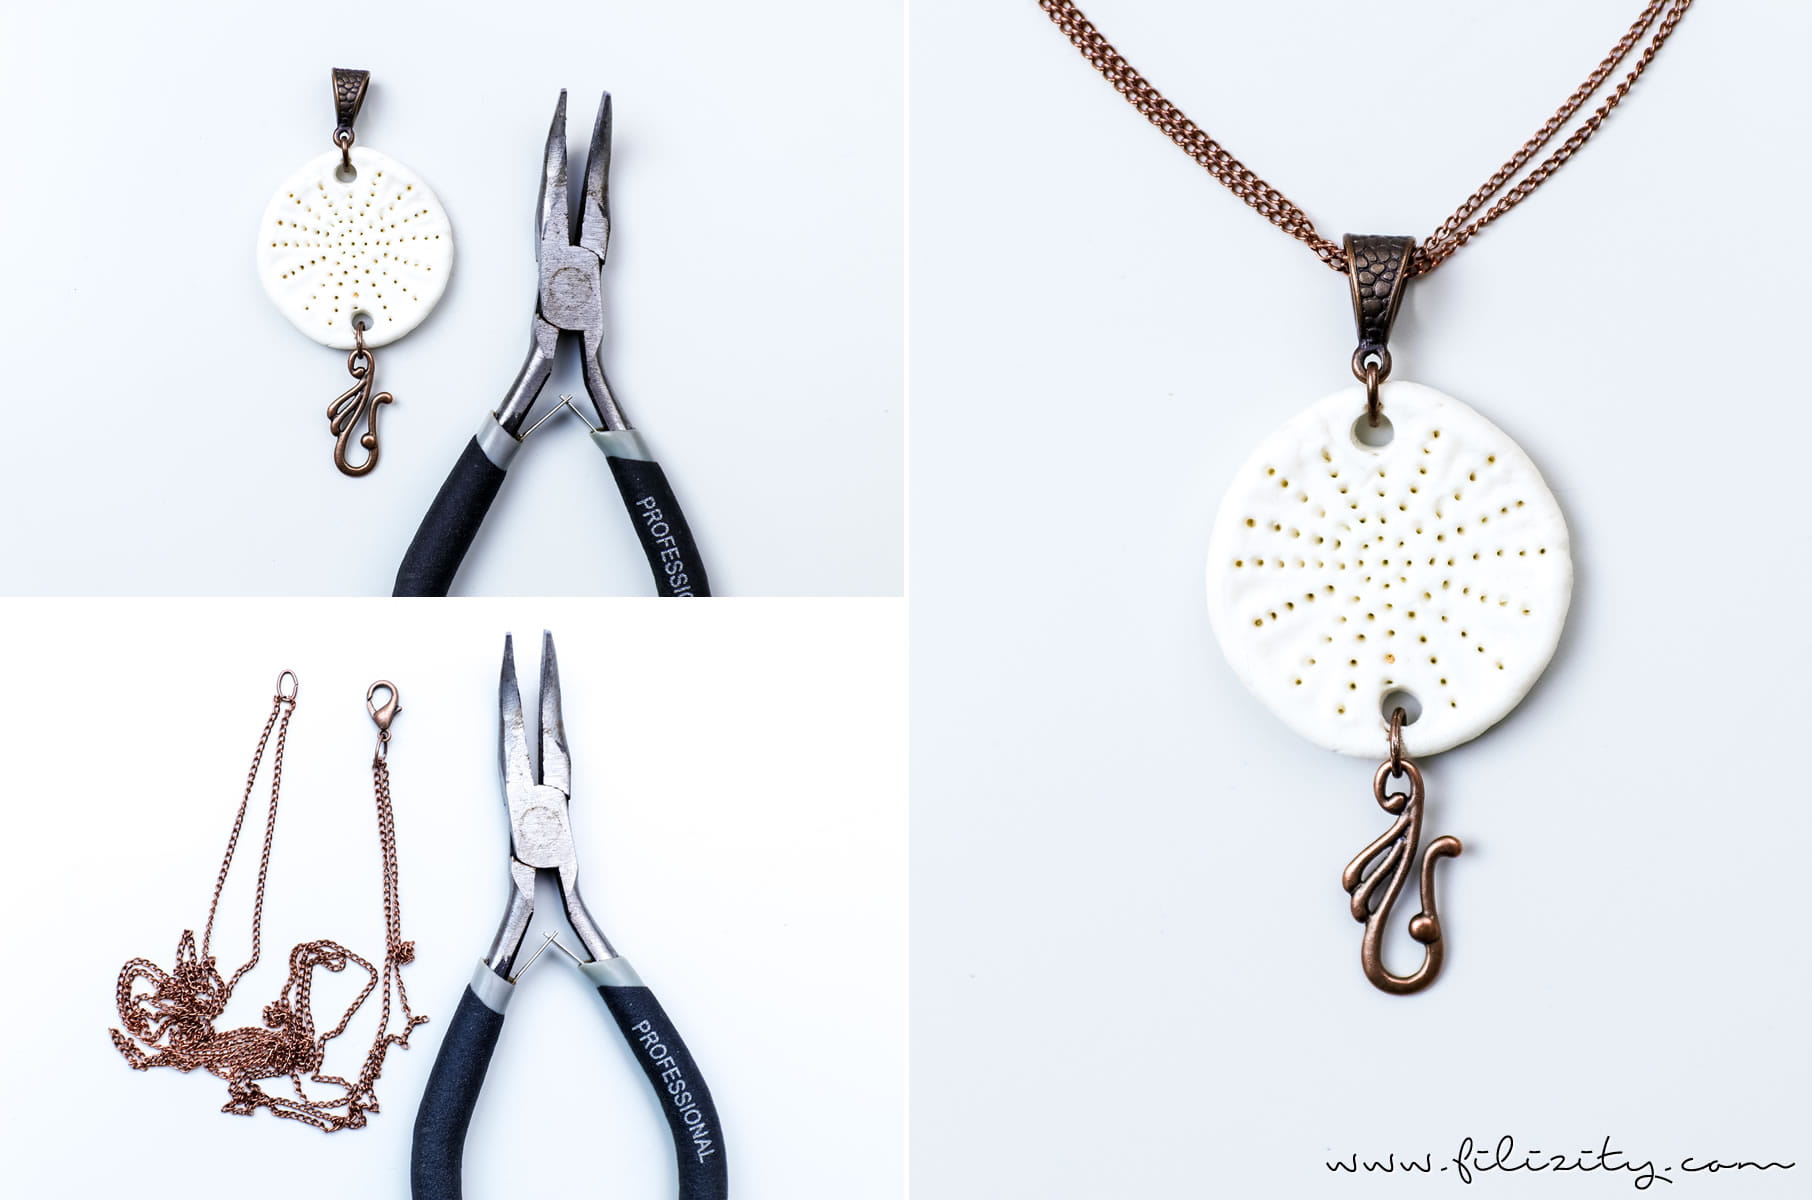 Schmuck selber machen: DIY Halskette mit Katporzellan-Anhänger - perfekt als Geschenkidee | Filizitiy.com | DIY-Blog aus dem Rheinland #kaltporzellan #boho